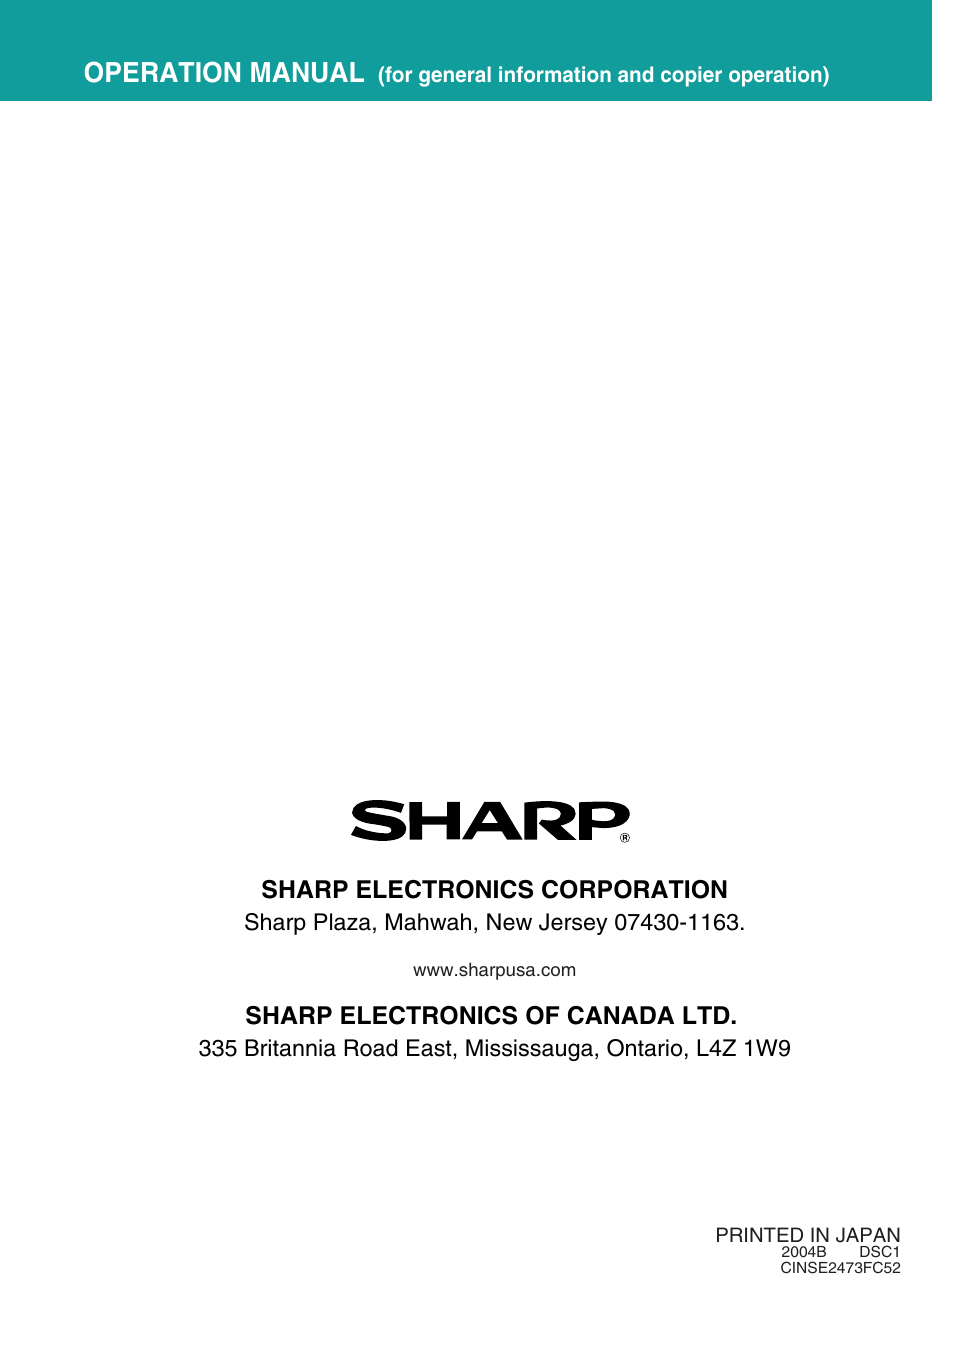 Operation manual, Sharp electronics corporation, Sharp electronics of canada ltd | Sharp AR-M700N User Manual | Page 172 / 172